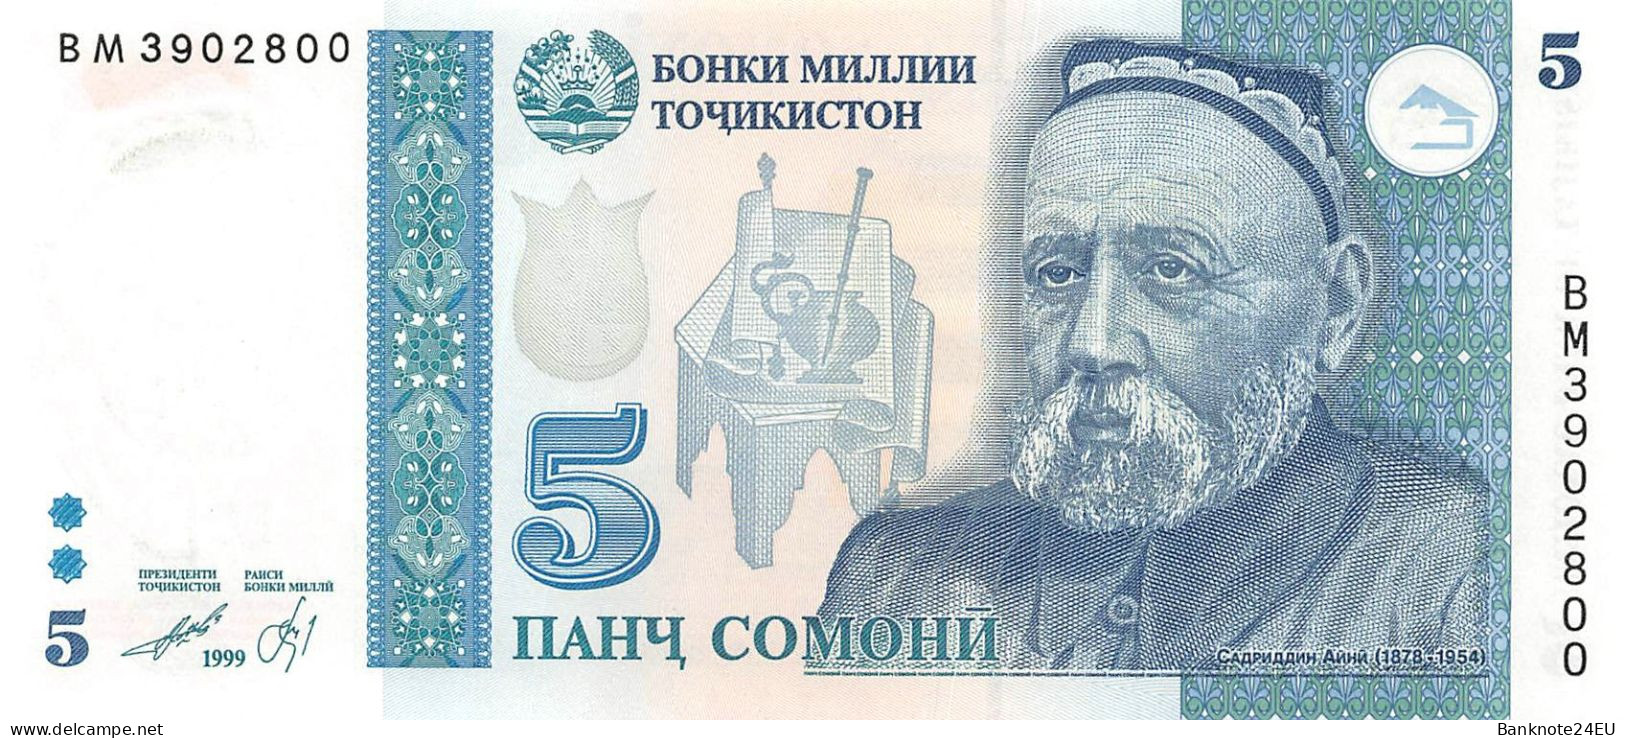 Tajikistan 5 Somoni 2010 Unc Pn 15c, Banknote24 - Tajikistan